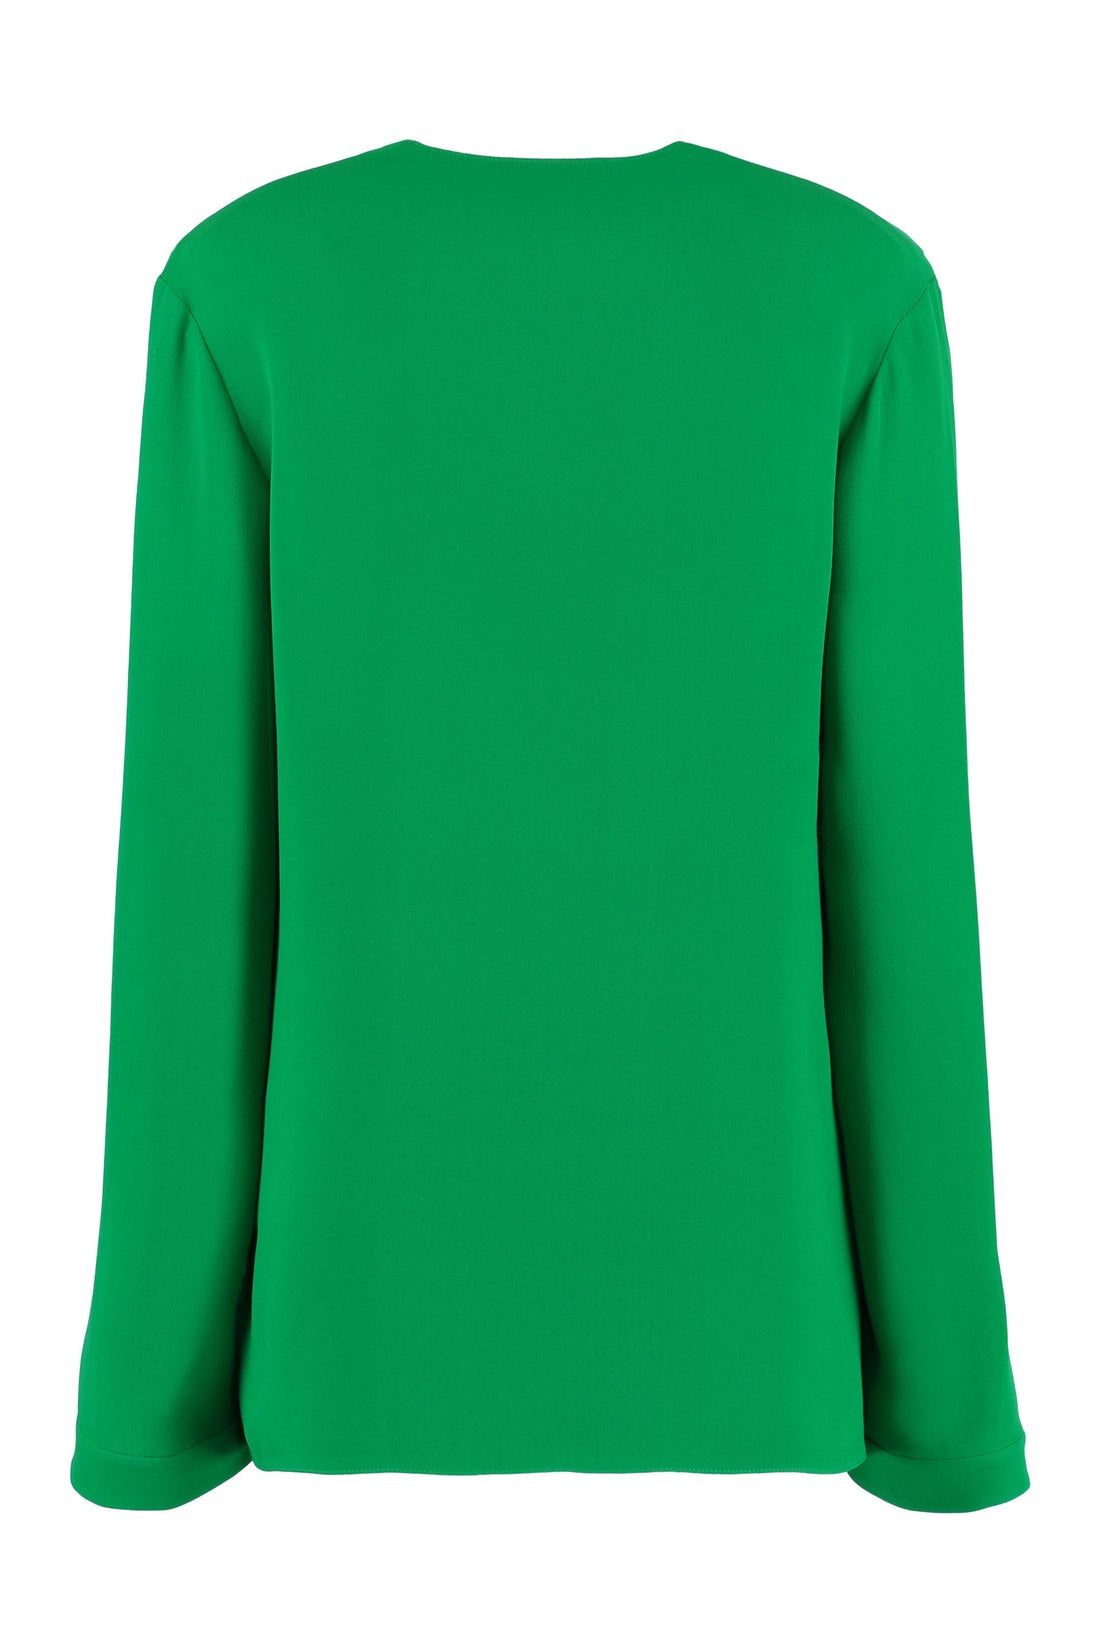 Valentino-OUTLET-SALE-Silk blouse-ARCHIVIST